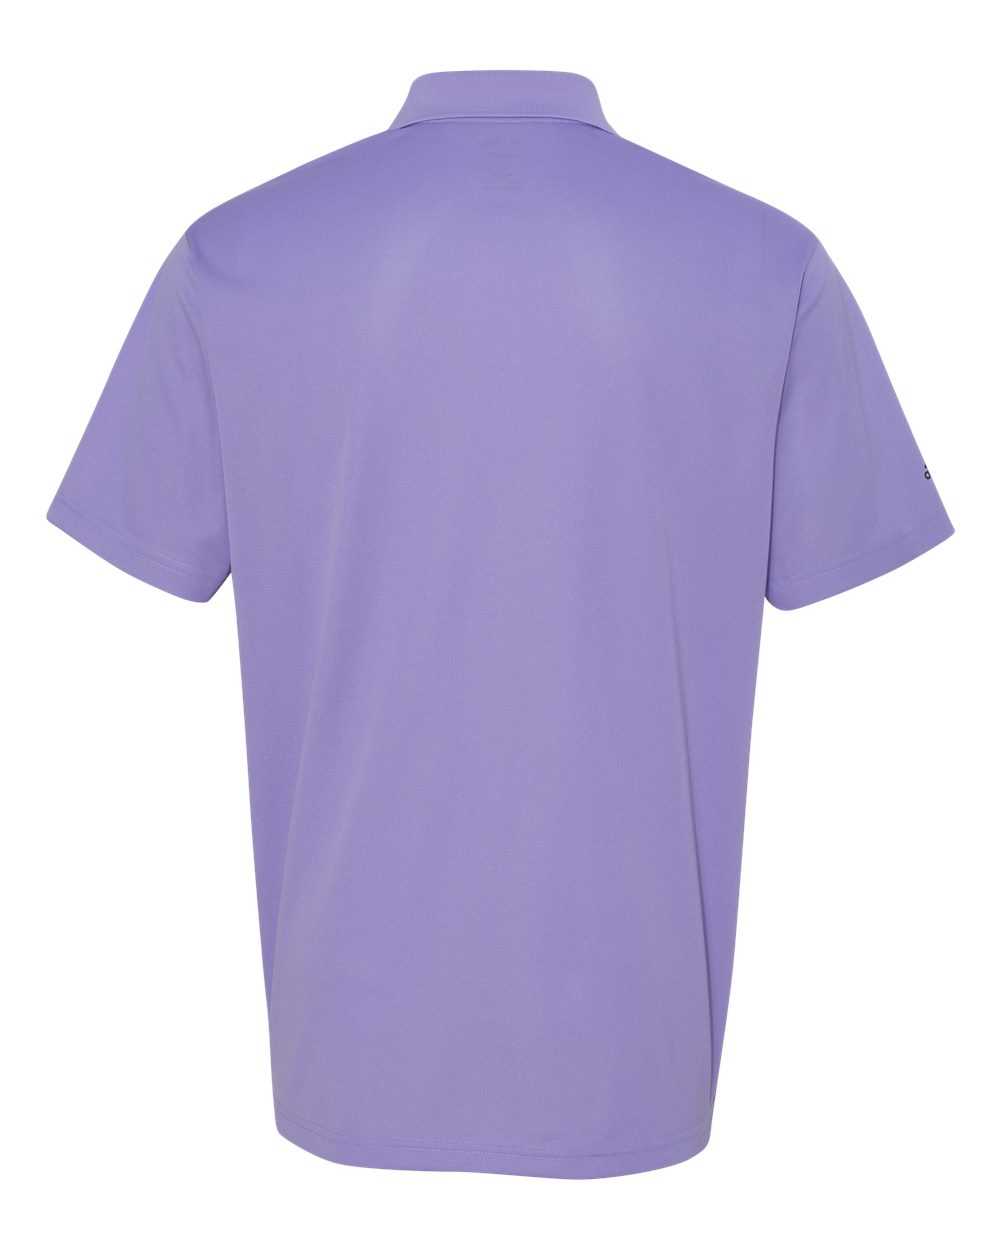 Adidas A130 Basic Sport Shirt - Light Flash Purple Black - HIT a Double